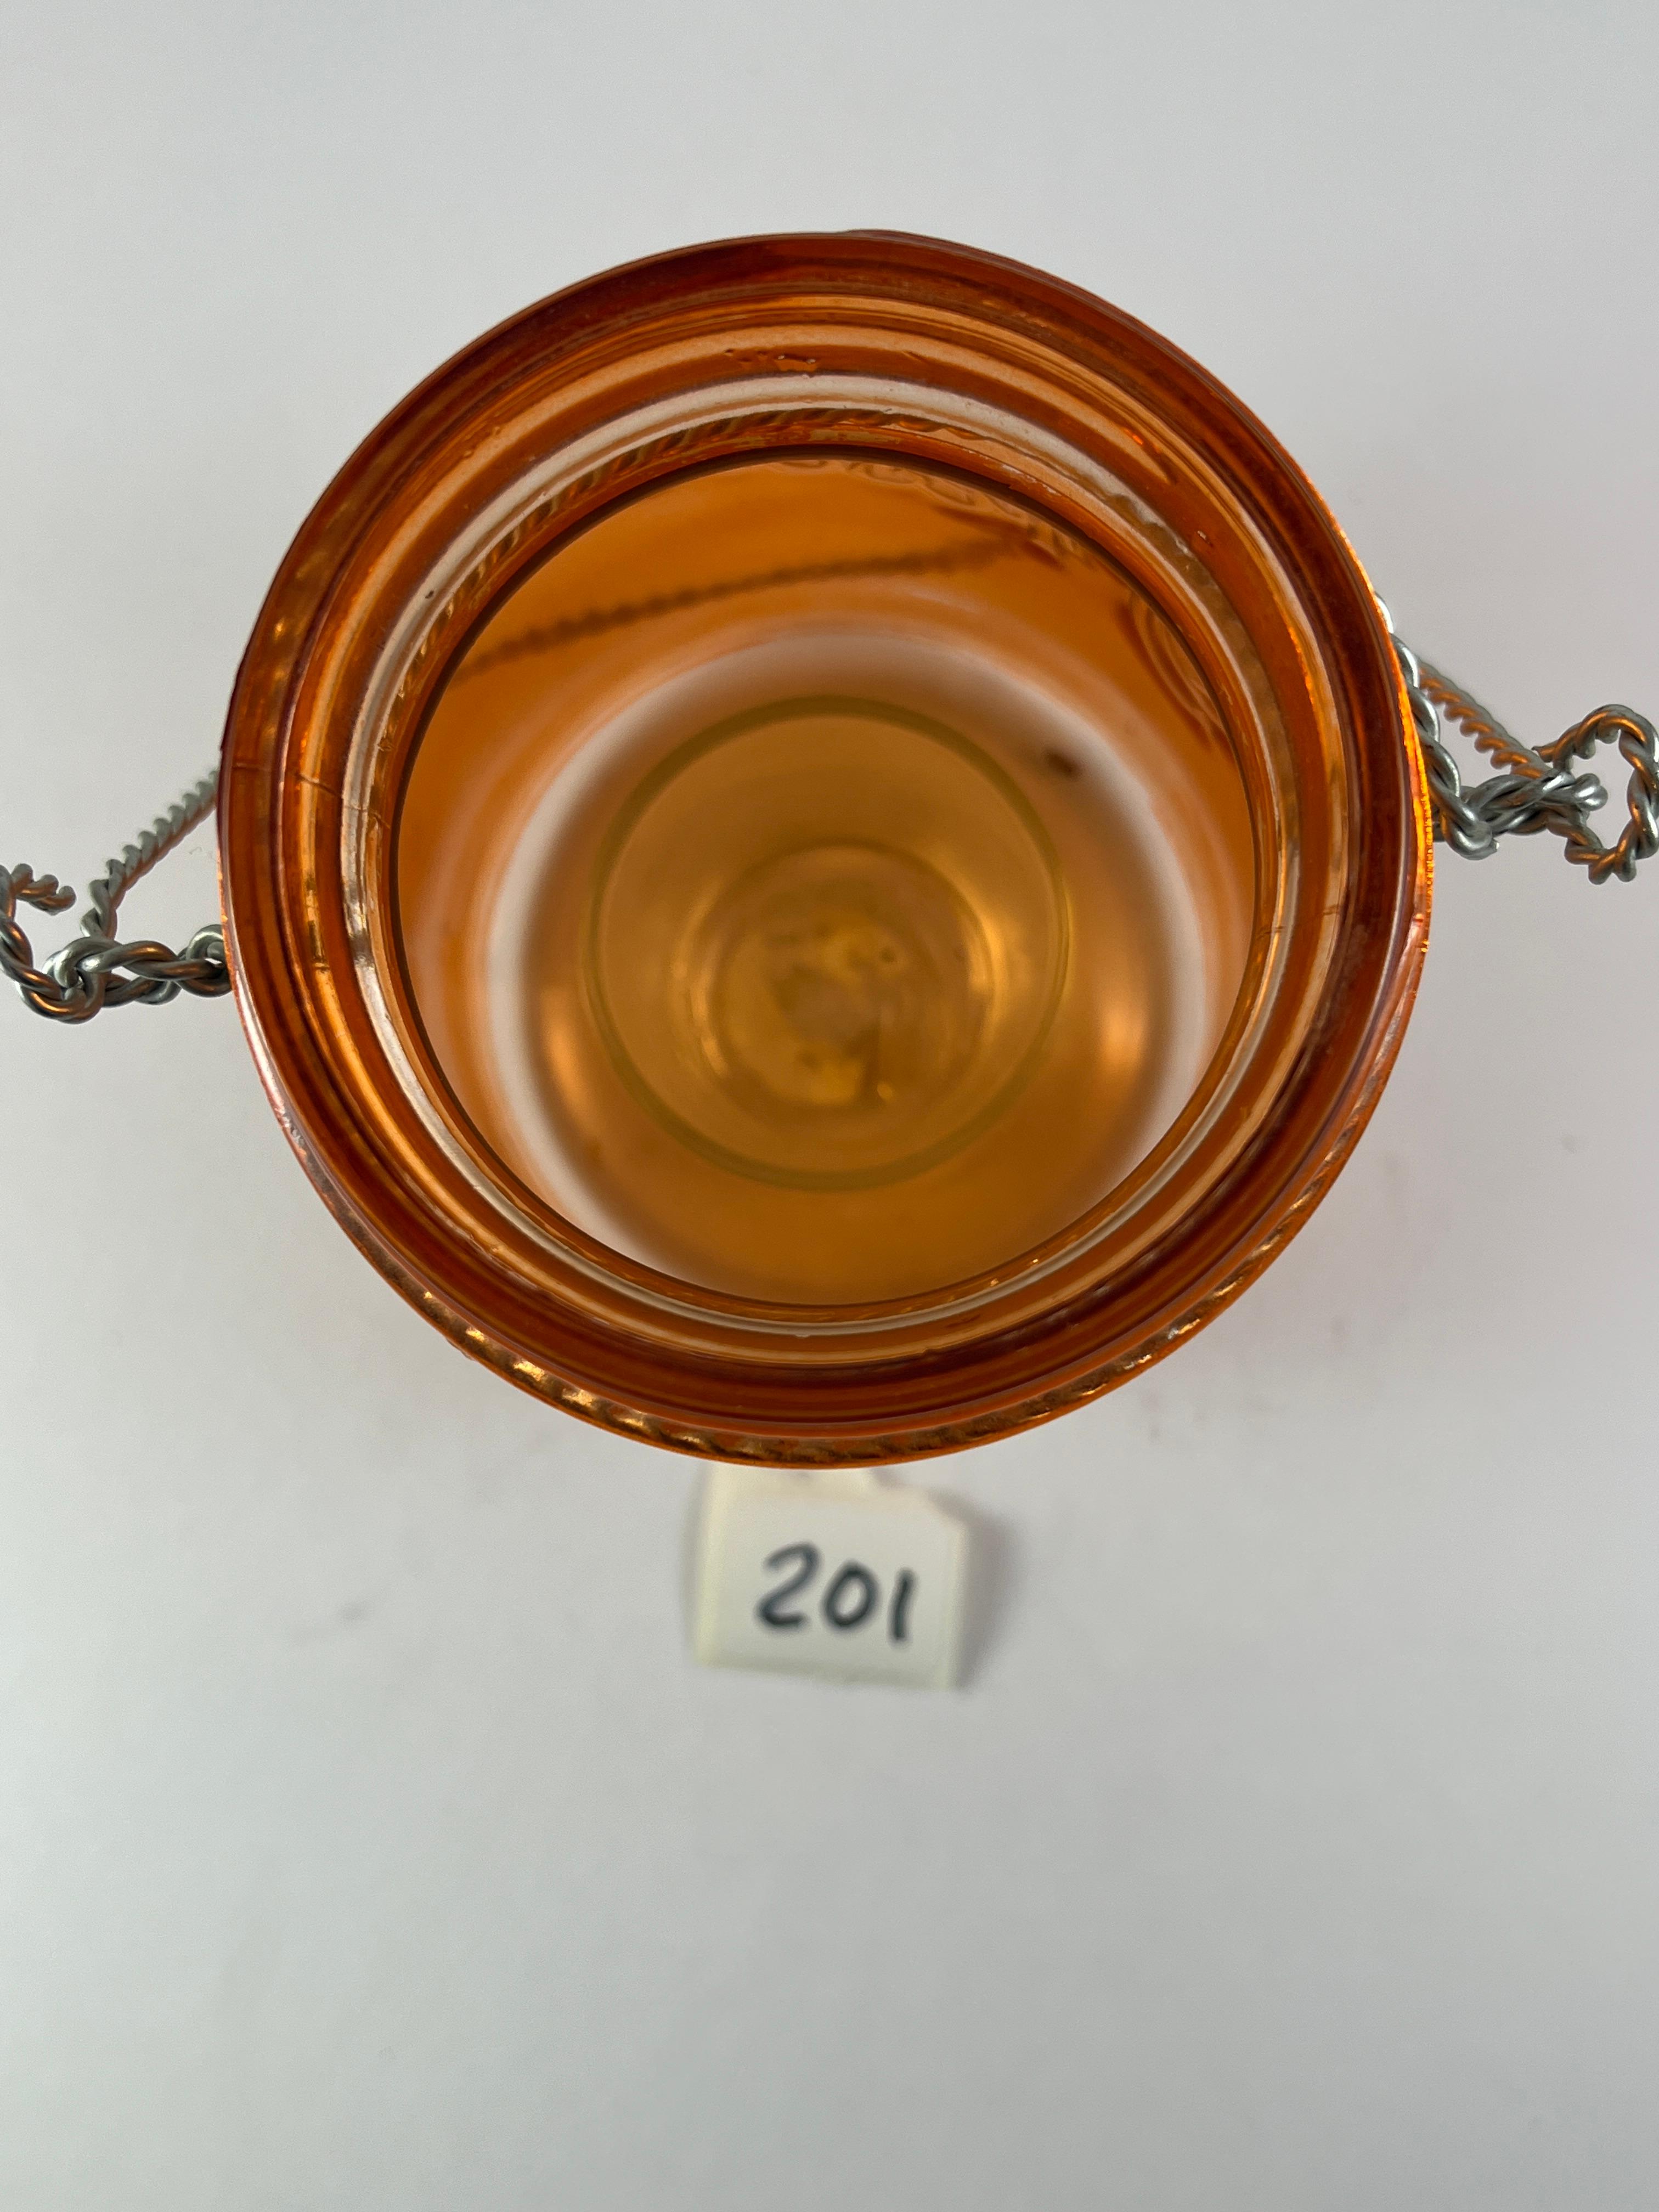 HARLEY DAVIDSON AMBER GLASS JAR